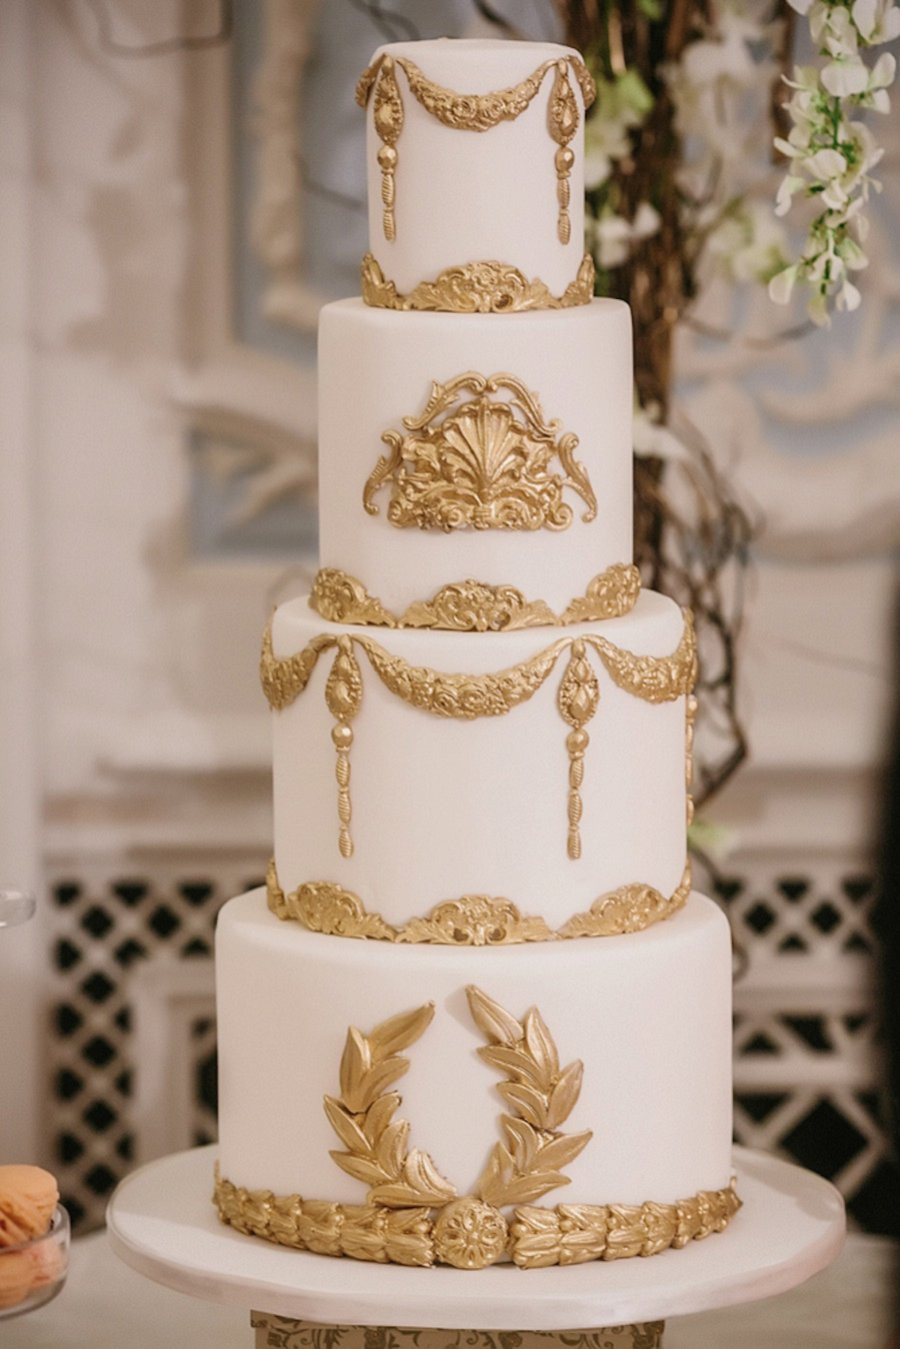 Best Wedding Cakes
 Top 10 Wedding Cake Trends for 2016